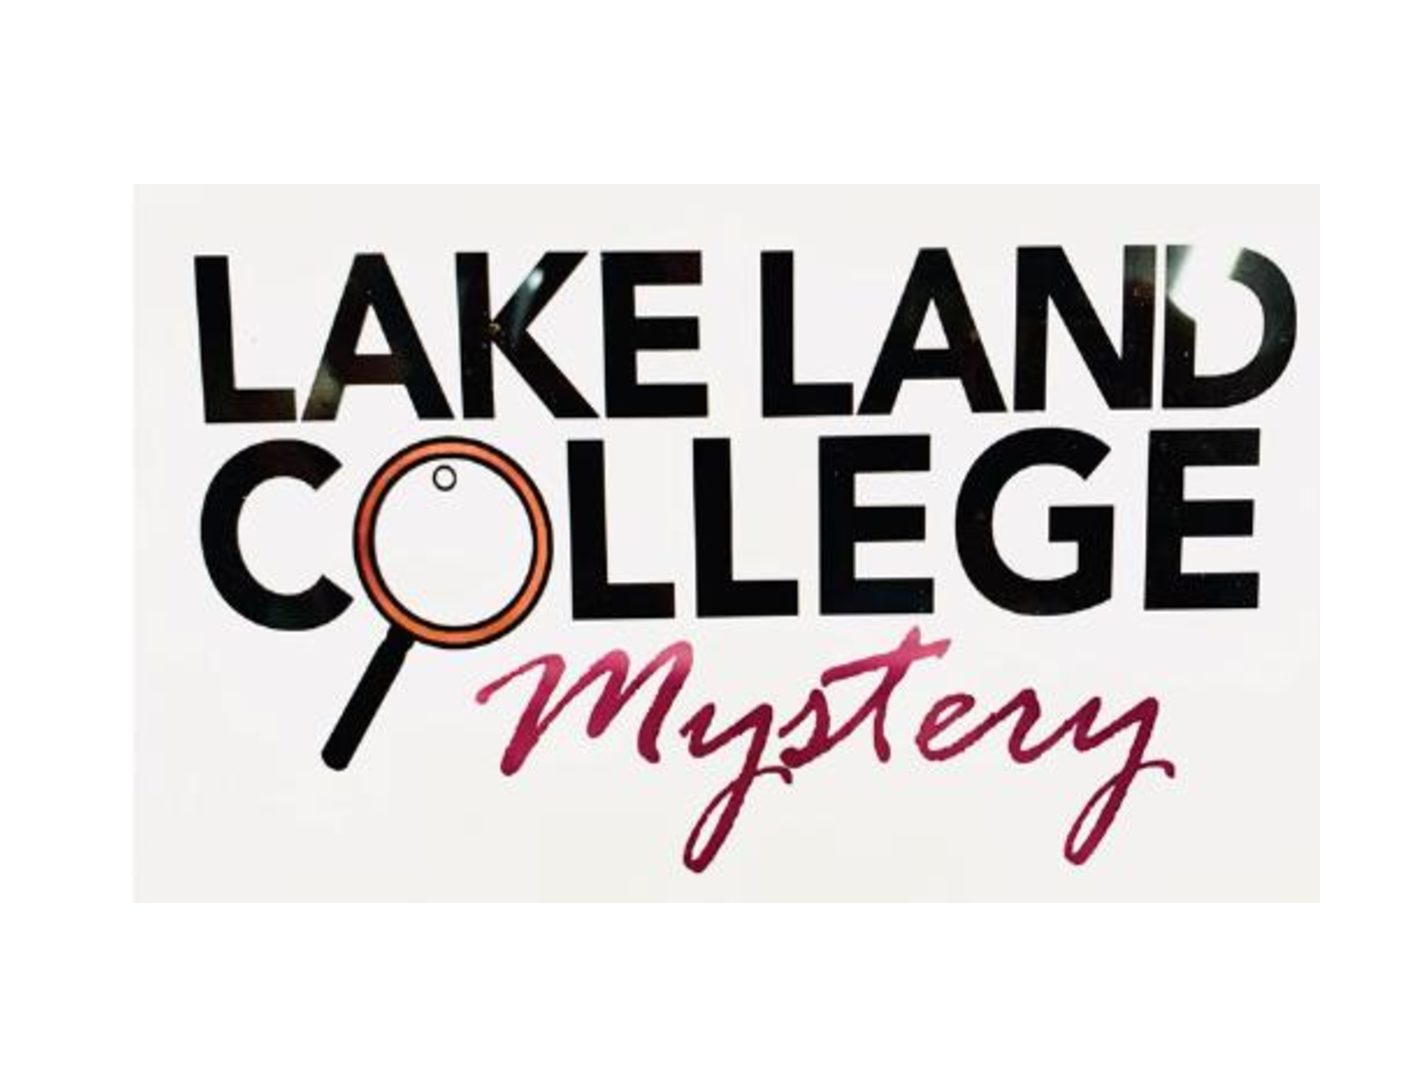  Lake Land Colleges mystery project kicks off March 13! Photo via Tara Blaser.